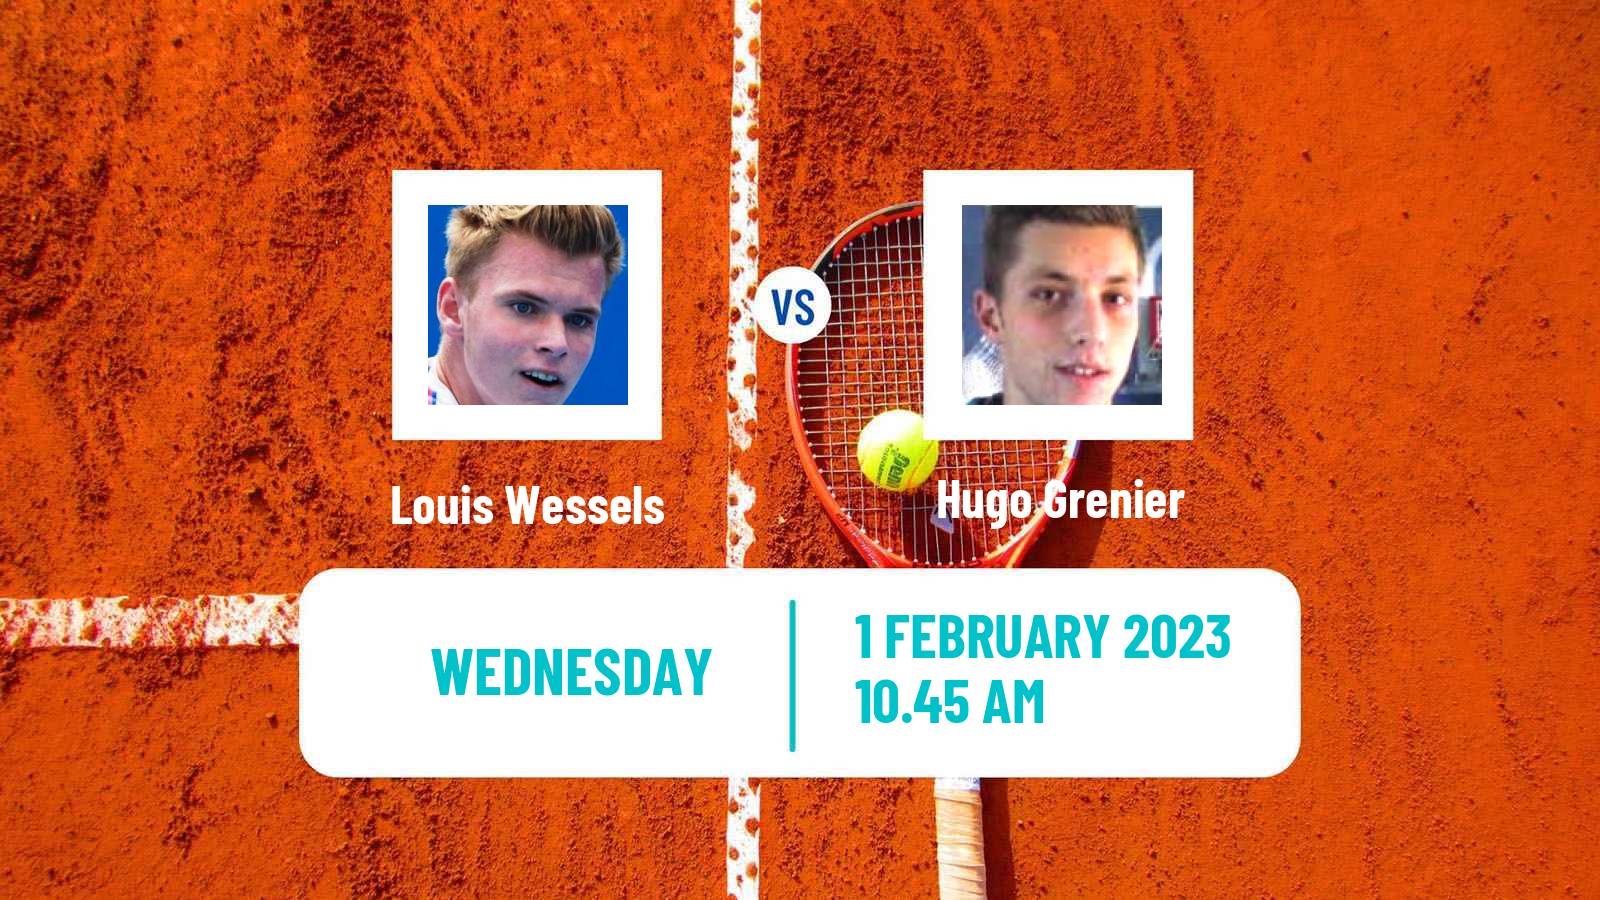 Tennis ATP Challenger Louis Wessels - Hugo Grenier